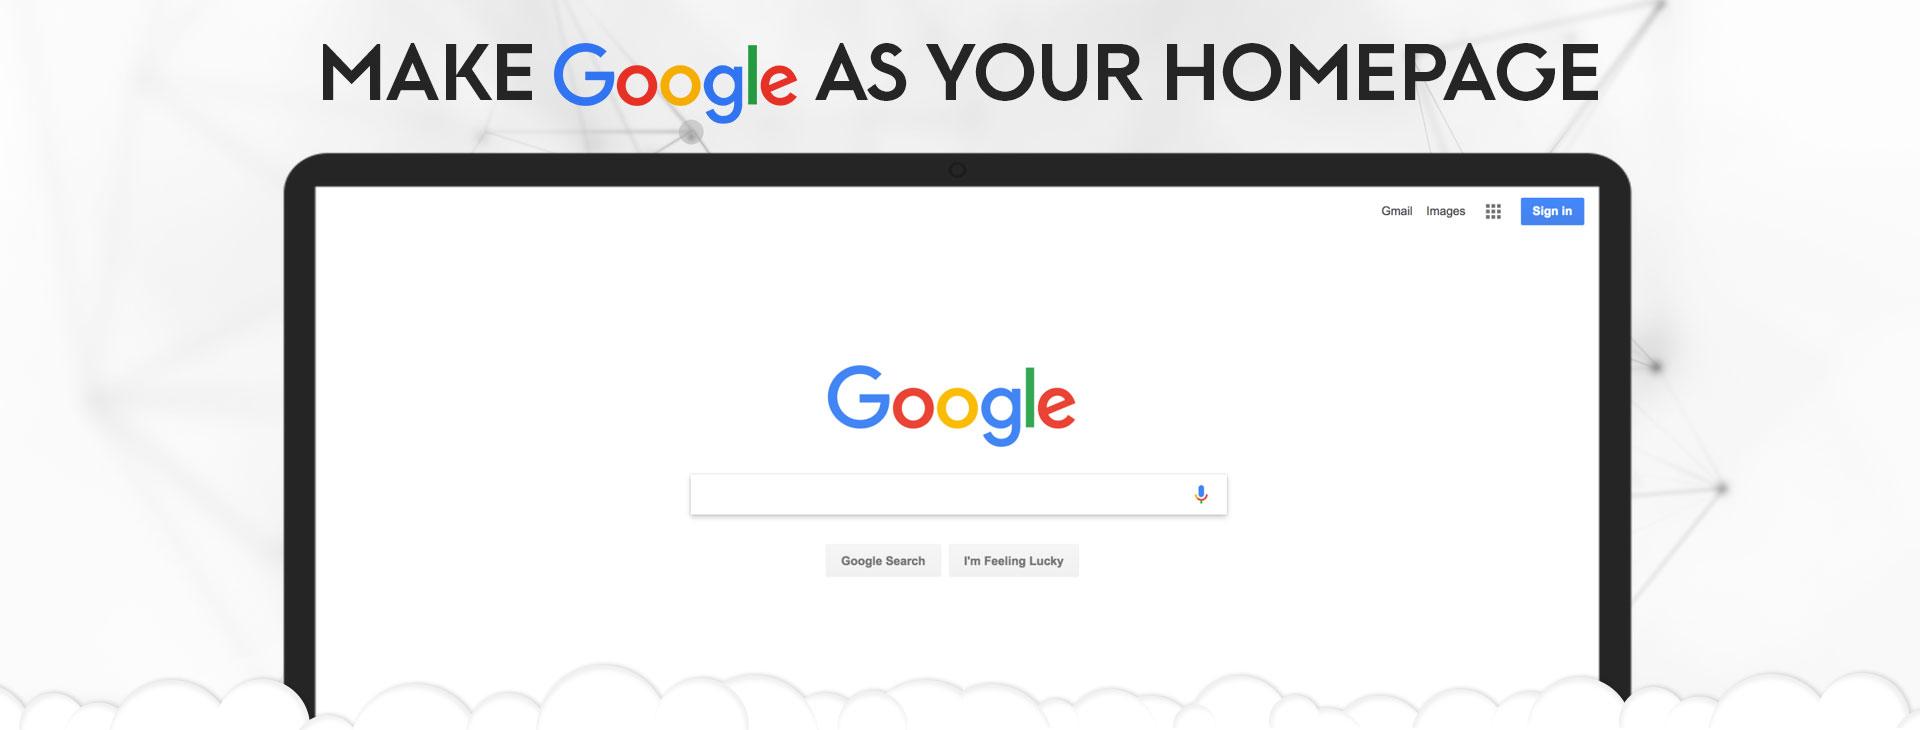 Make Google My Homepage Logo - Reset My Homepage